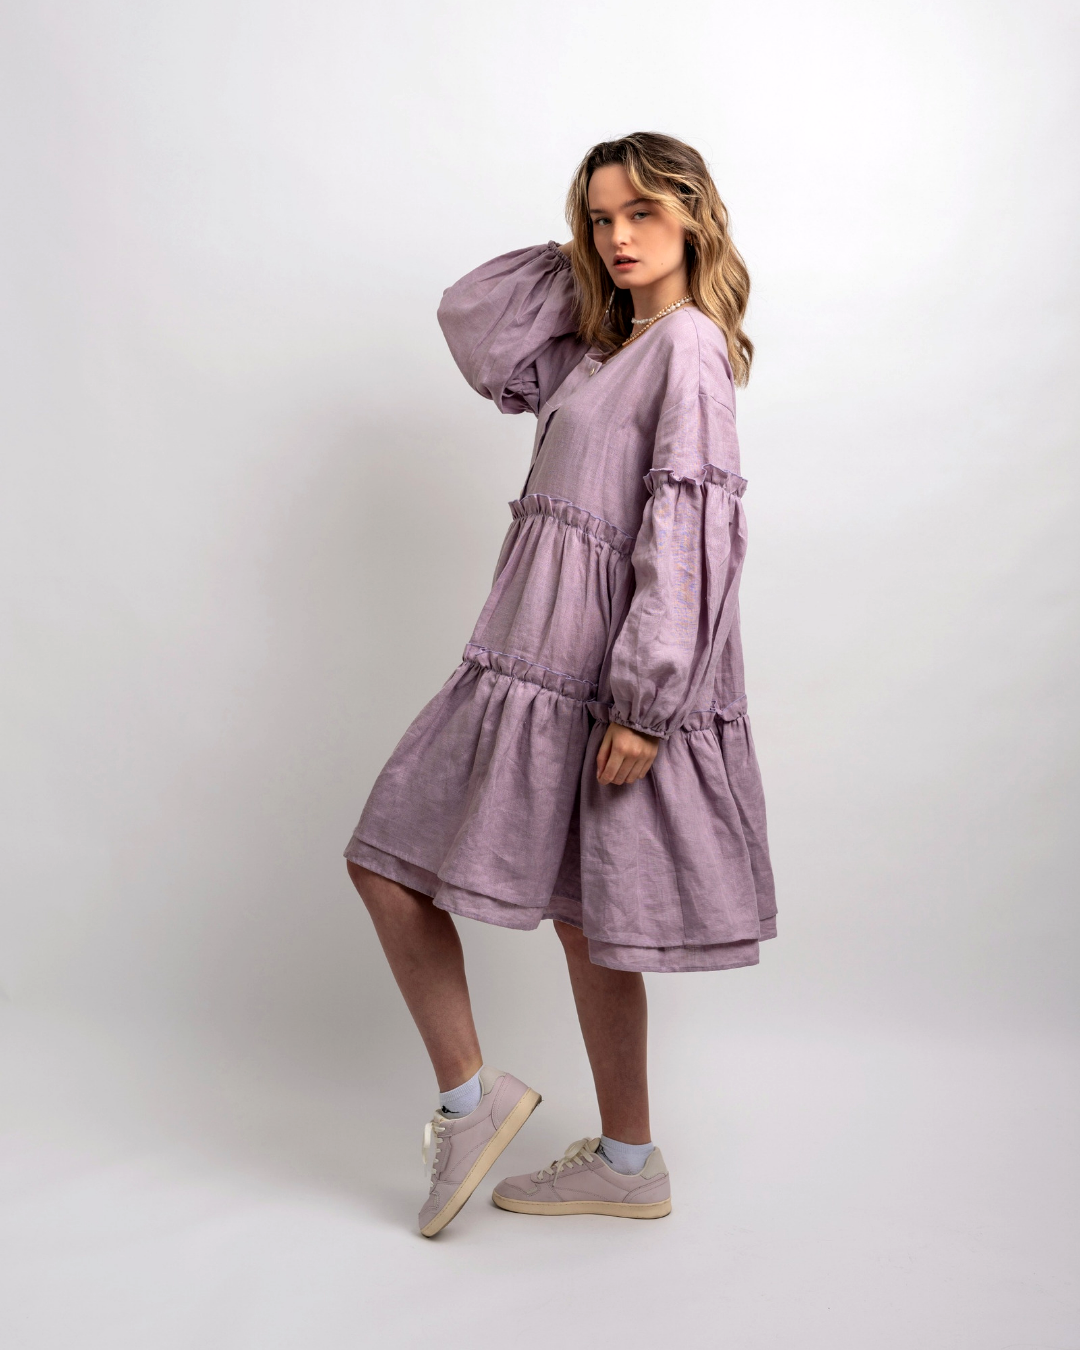 Linen lilac boho dress with ruffles